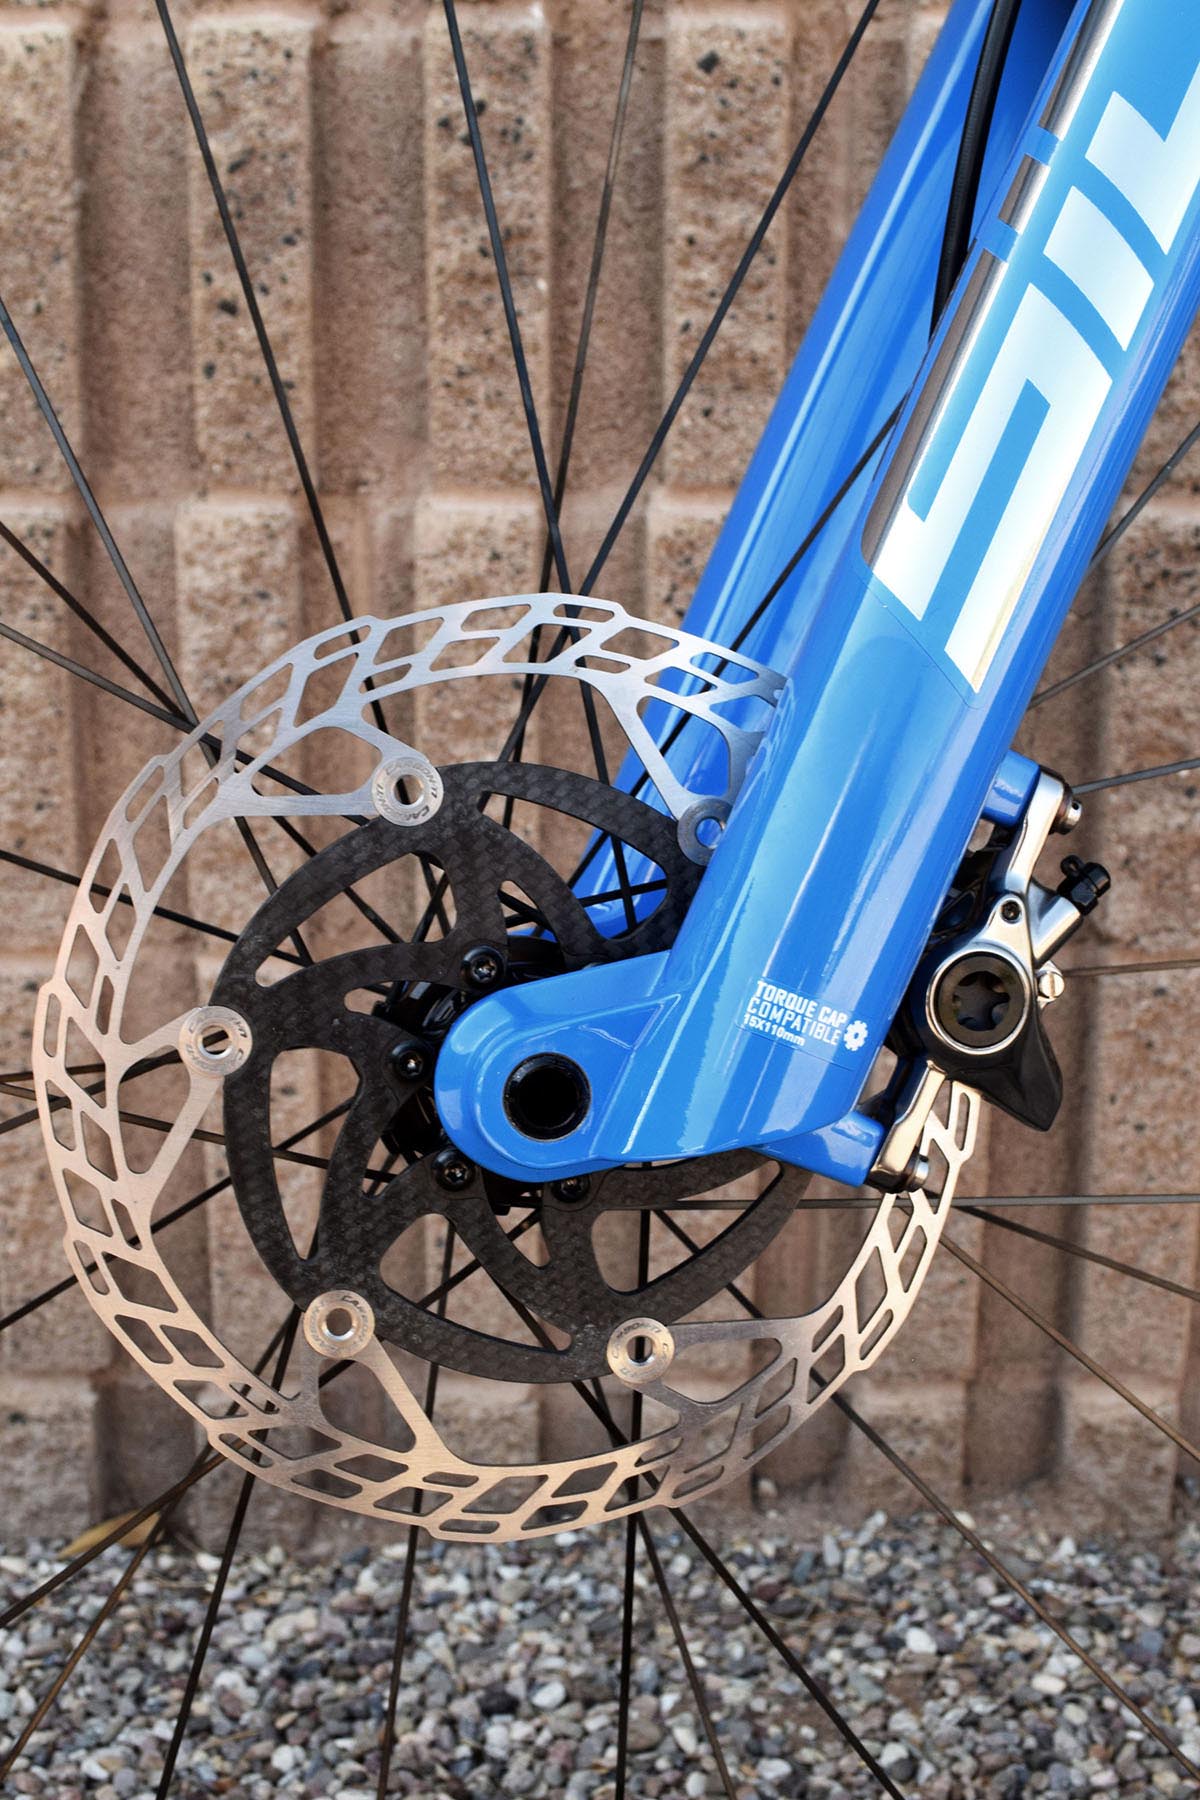 19.8lb Specialized Epic EVO Fair Wheel Bikes custom sid